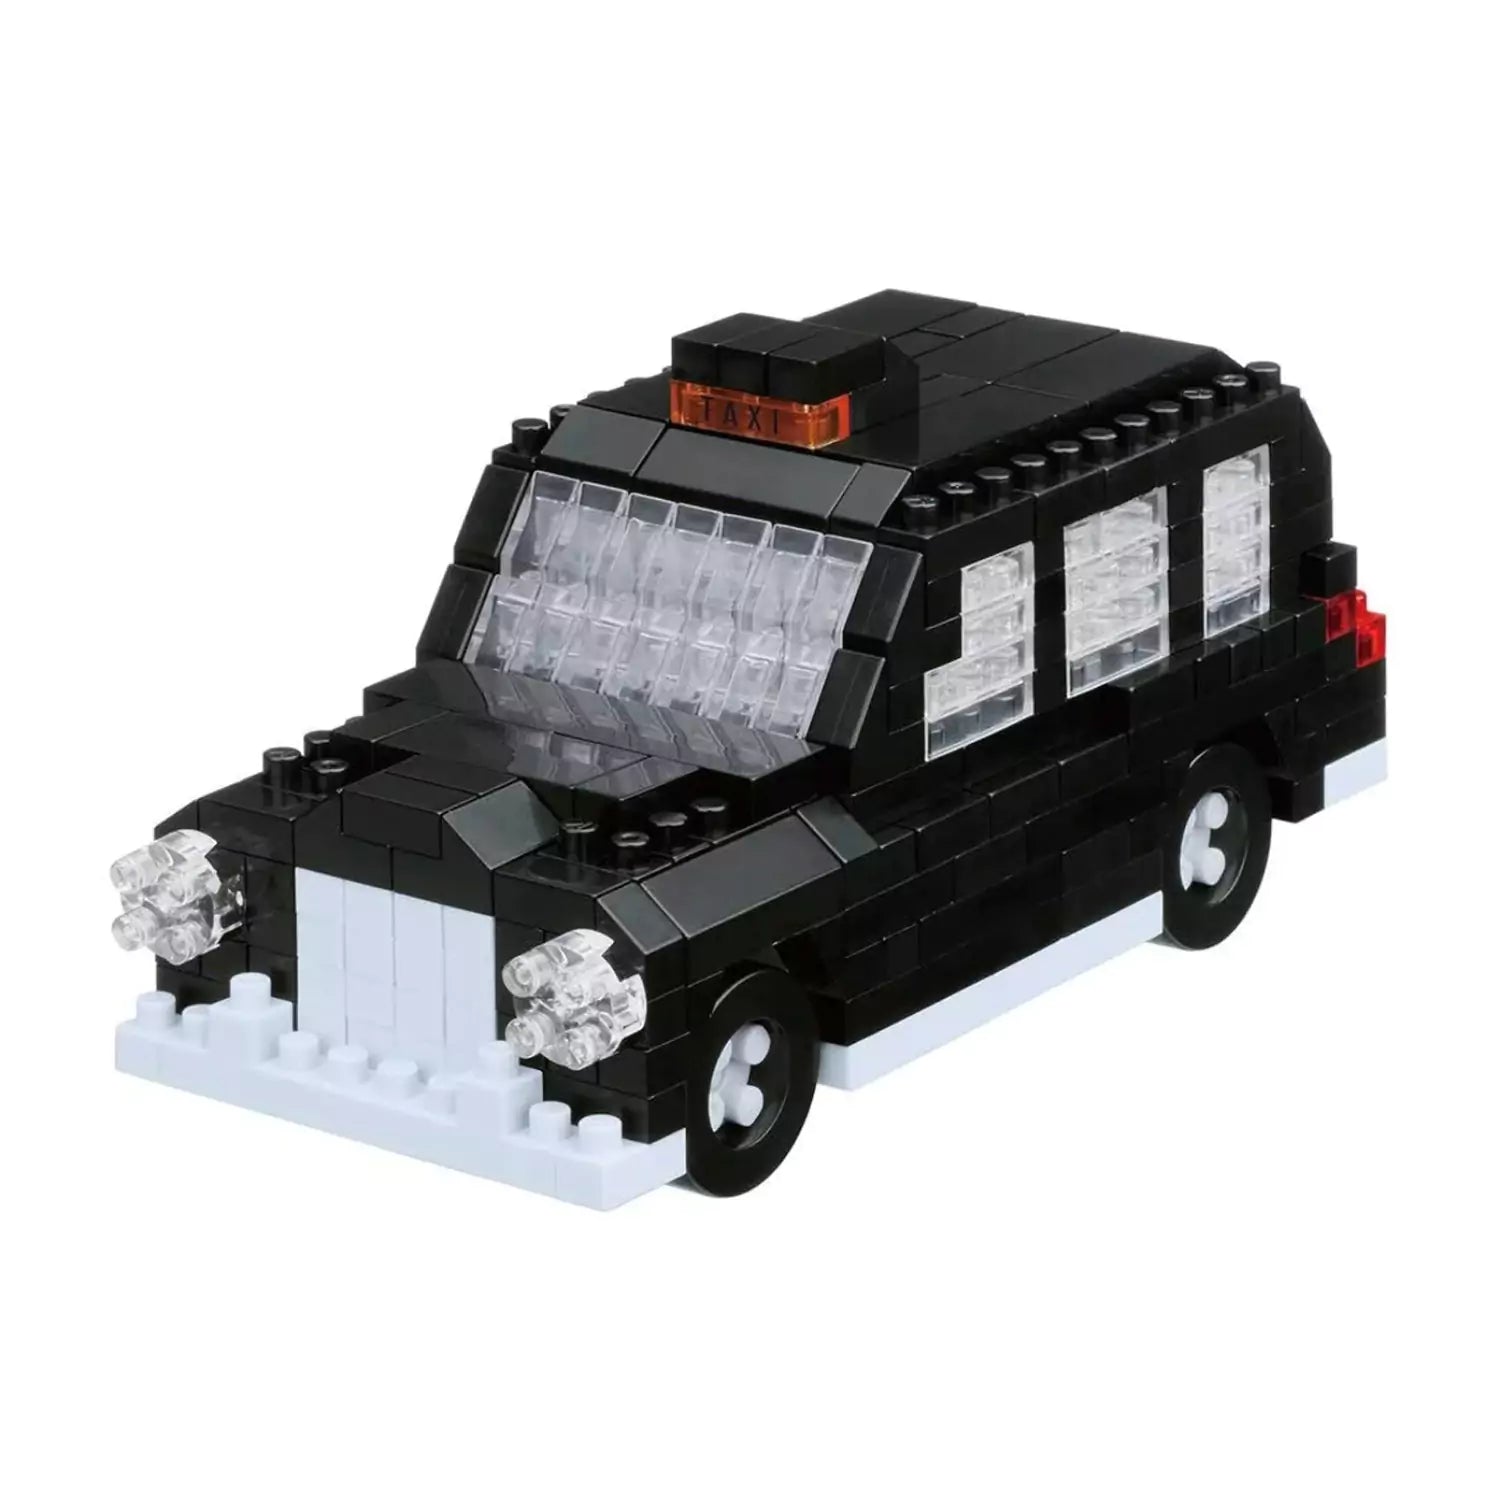 An image of Micro Building Blocks - Nanoblock Taxi Of London | SmallSmart UK